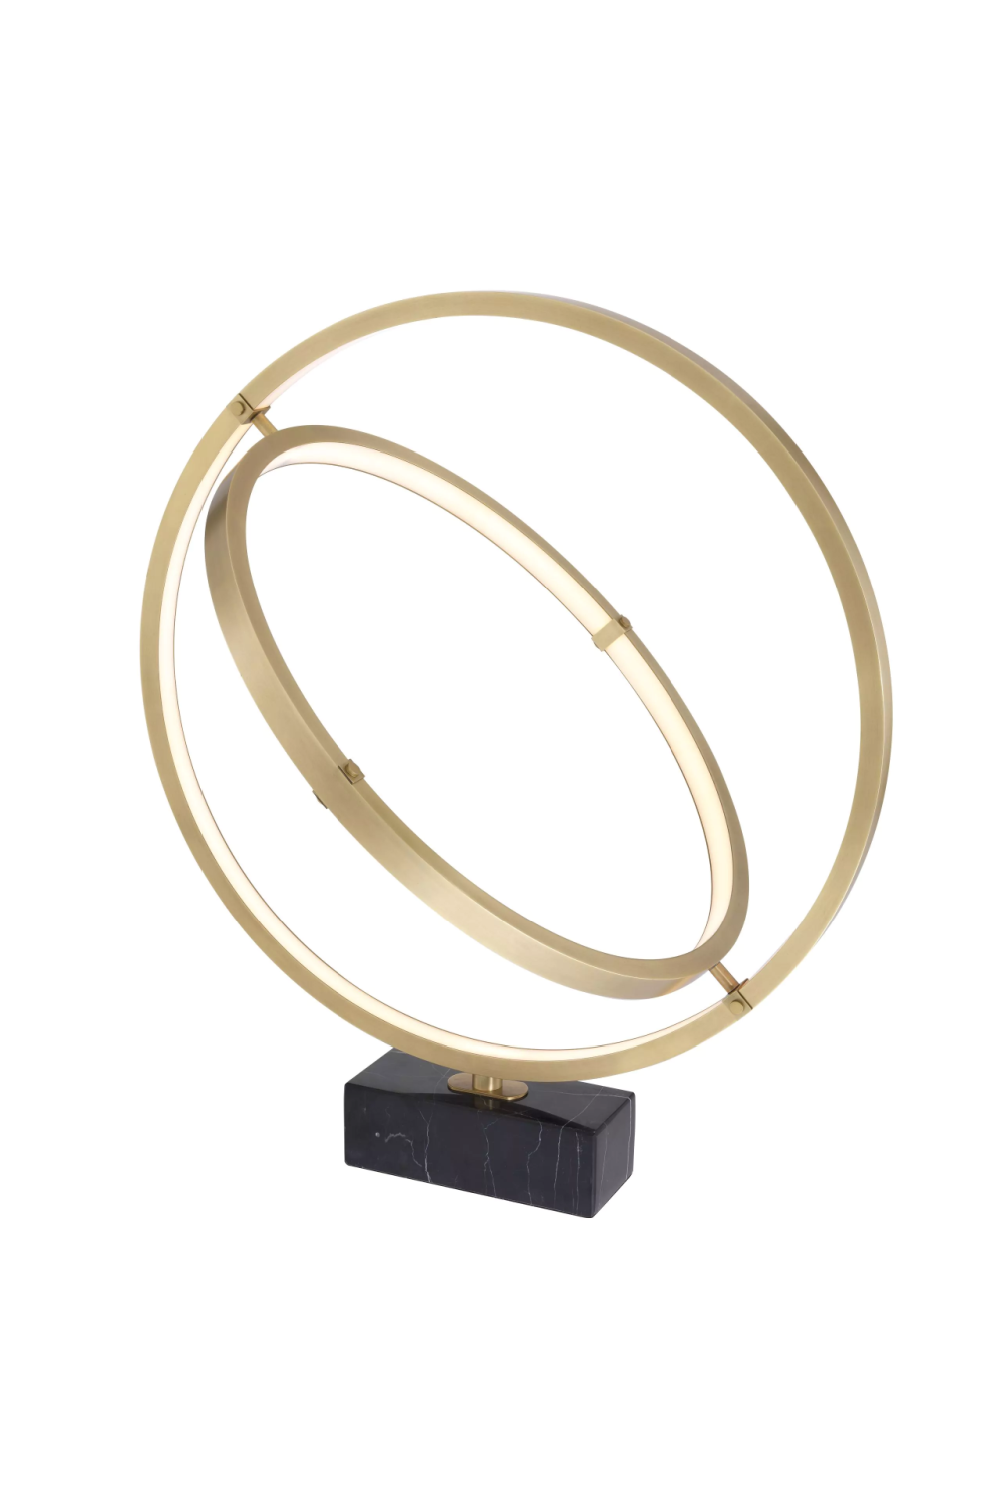 Planetarian Ring LED Table Lamp | Eichholtz Cassini | OROA